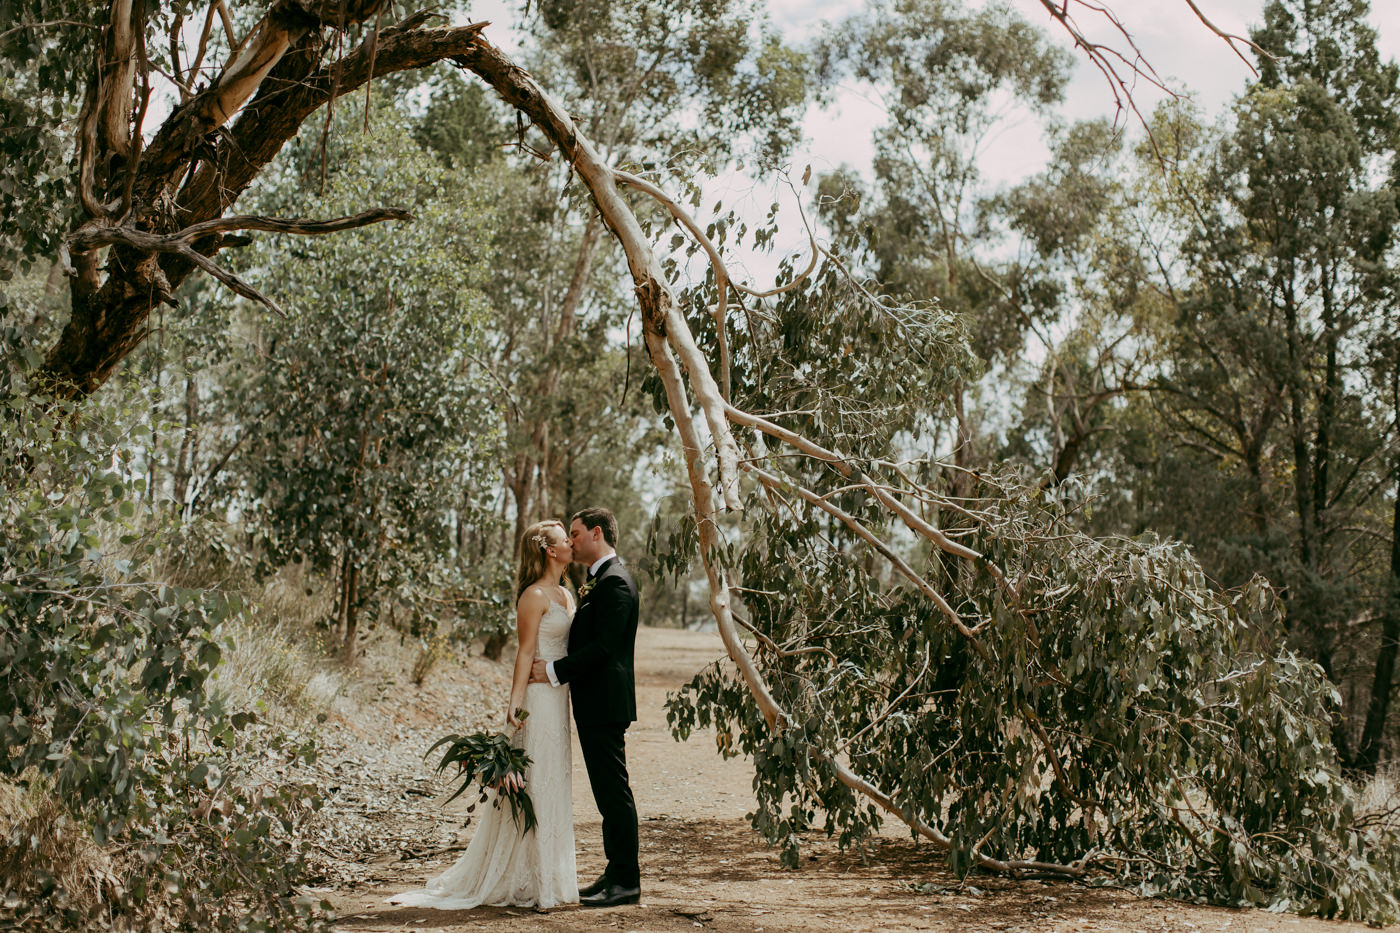 Anthony & Eliet - Wagga Wagga Wedding - Country NSW - Samantha Heather Photography-69.jpg